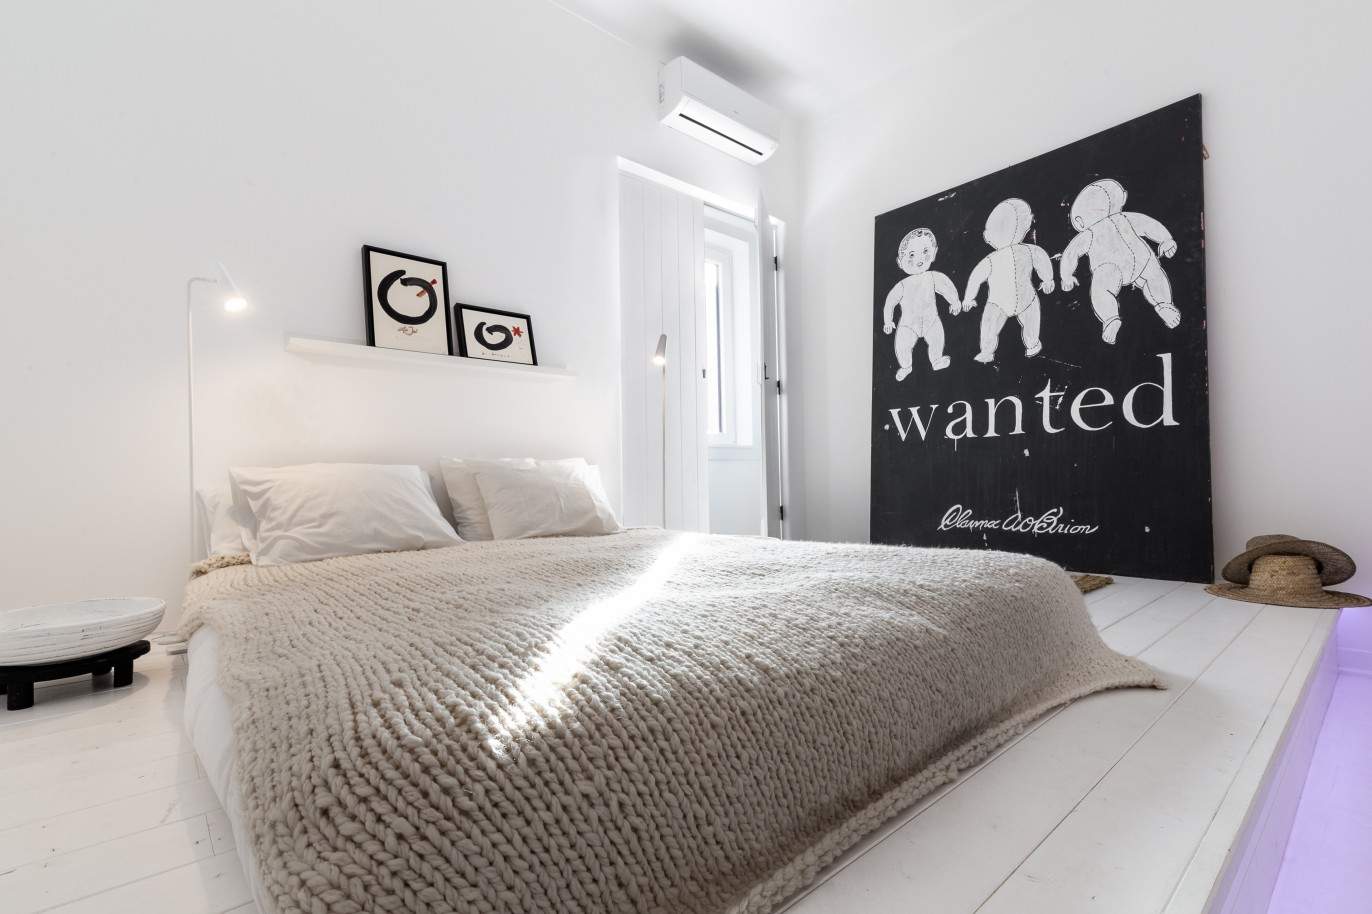 6 Bedrooms luxury villa for sale in Portimão, Algarve_208969